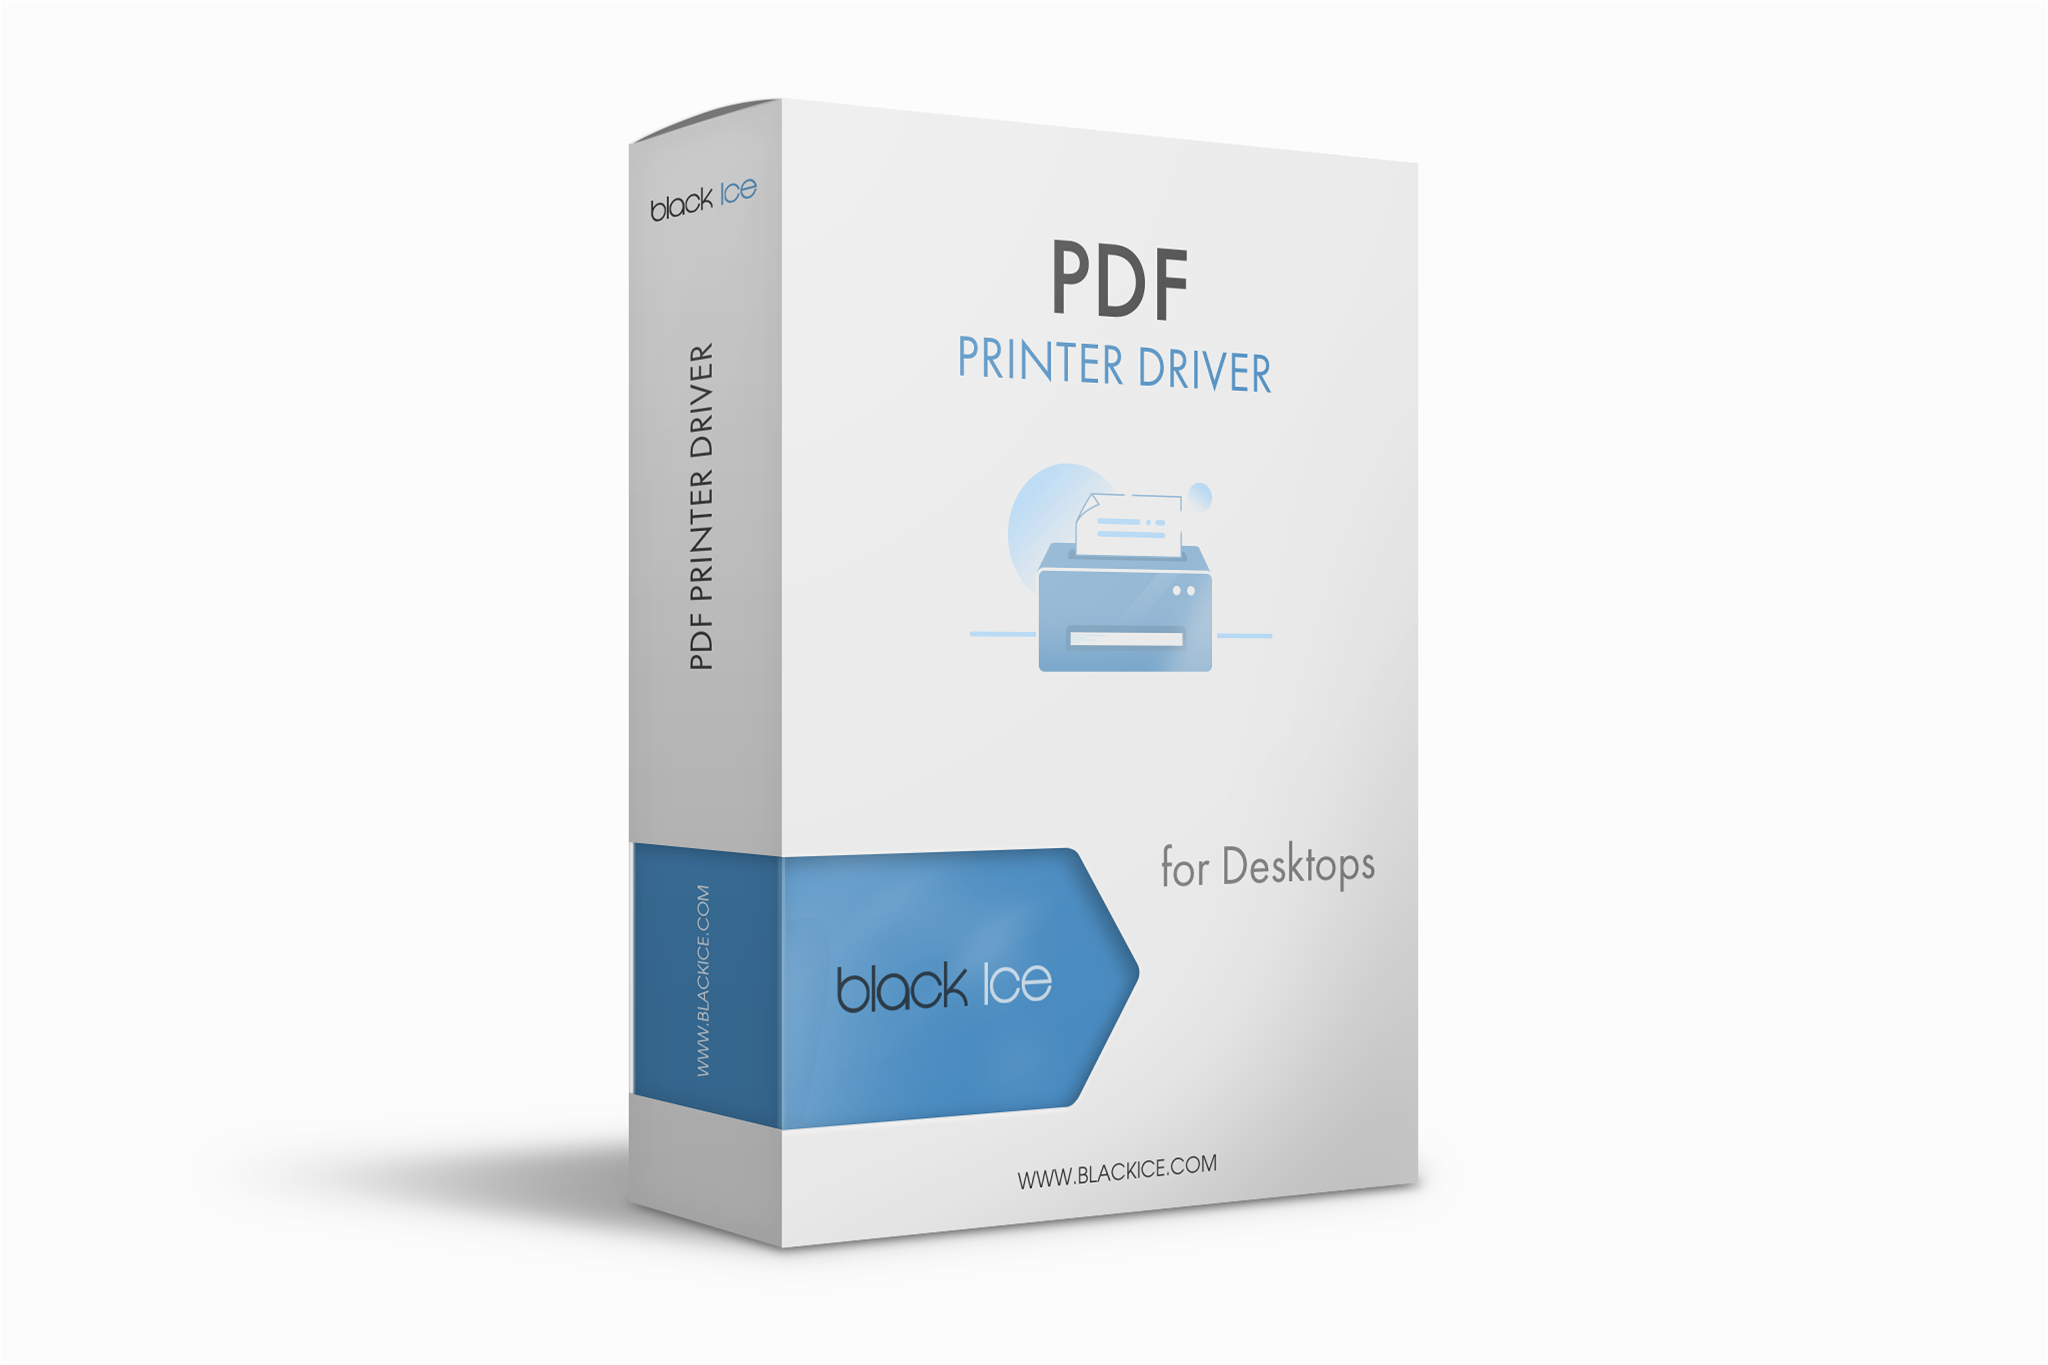 PDF Printer Driver Subscription (Single License and 3 multi-printers or ports)